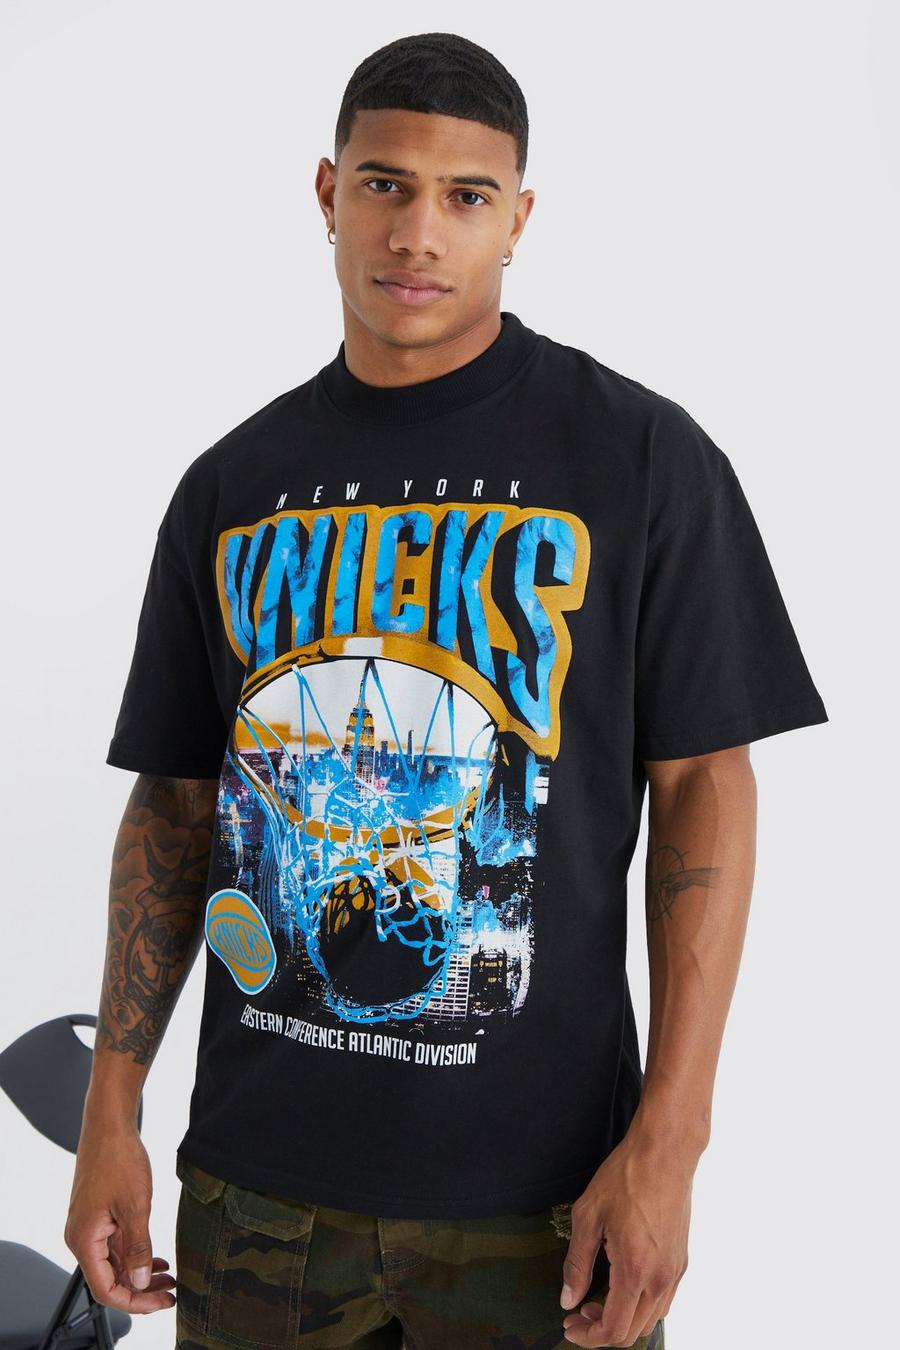 T-Shirt mit lizenziertem New York Knicks Nba Print, Black schwarz